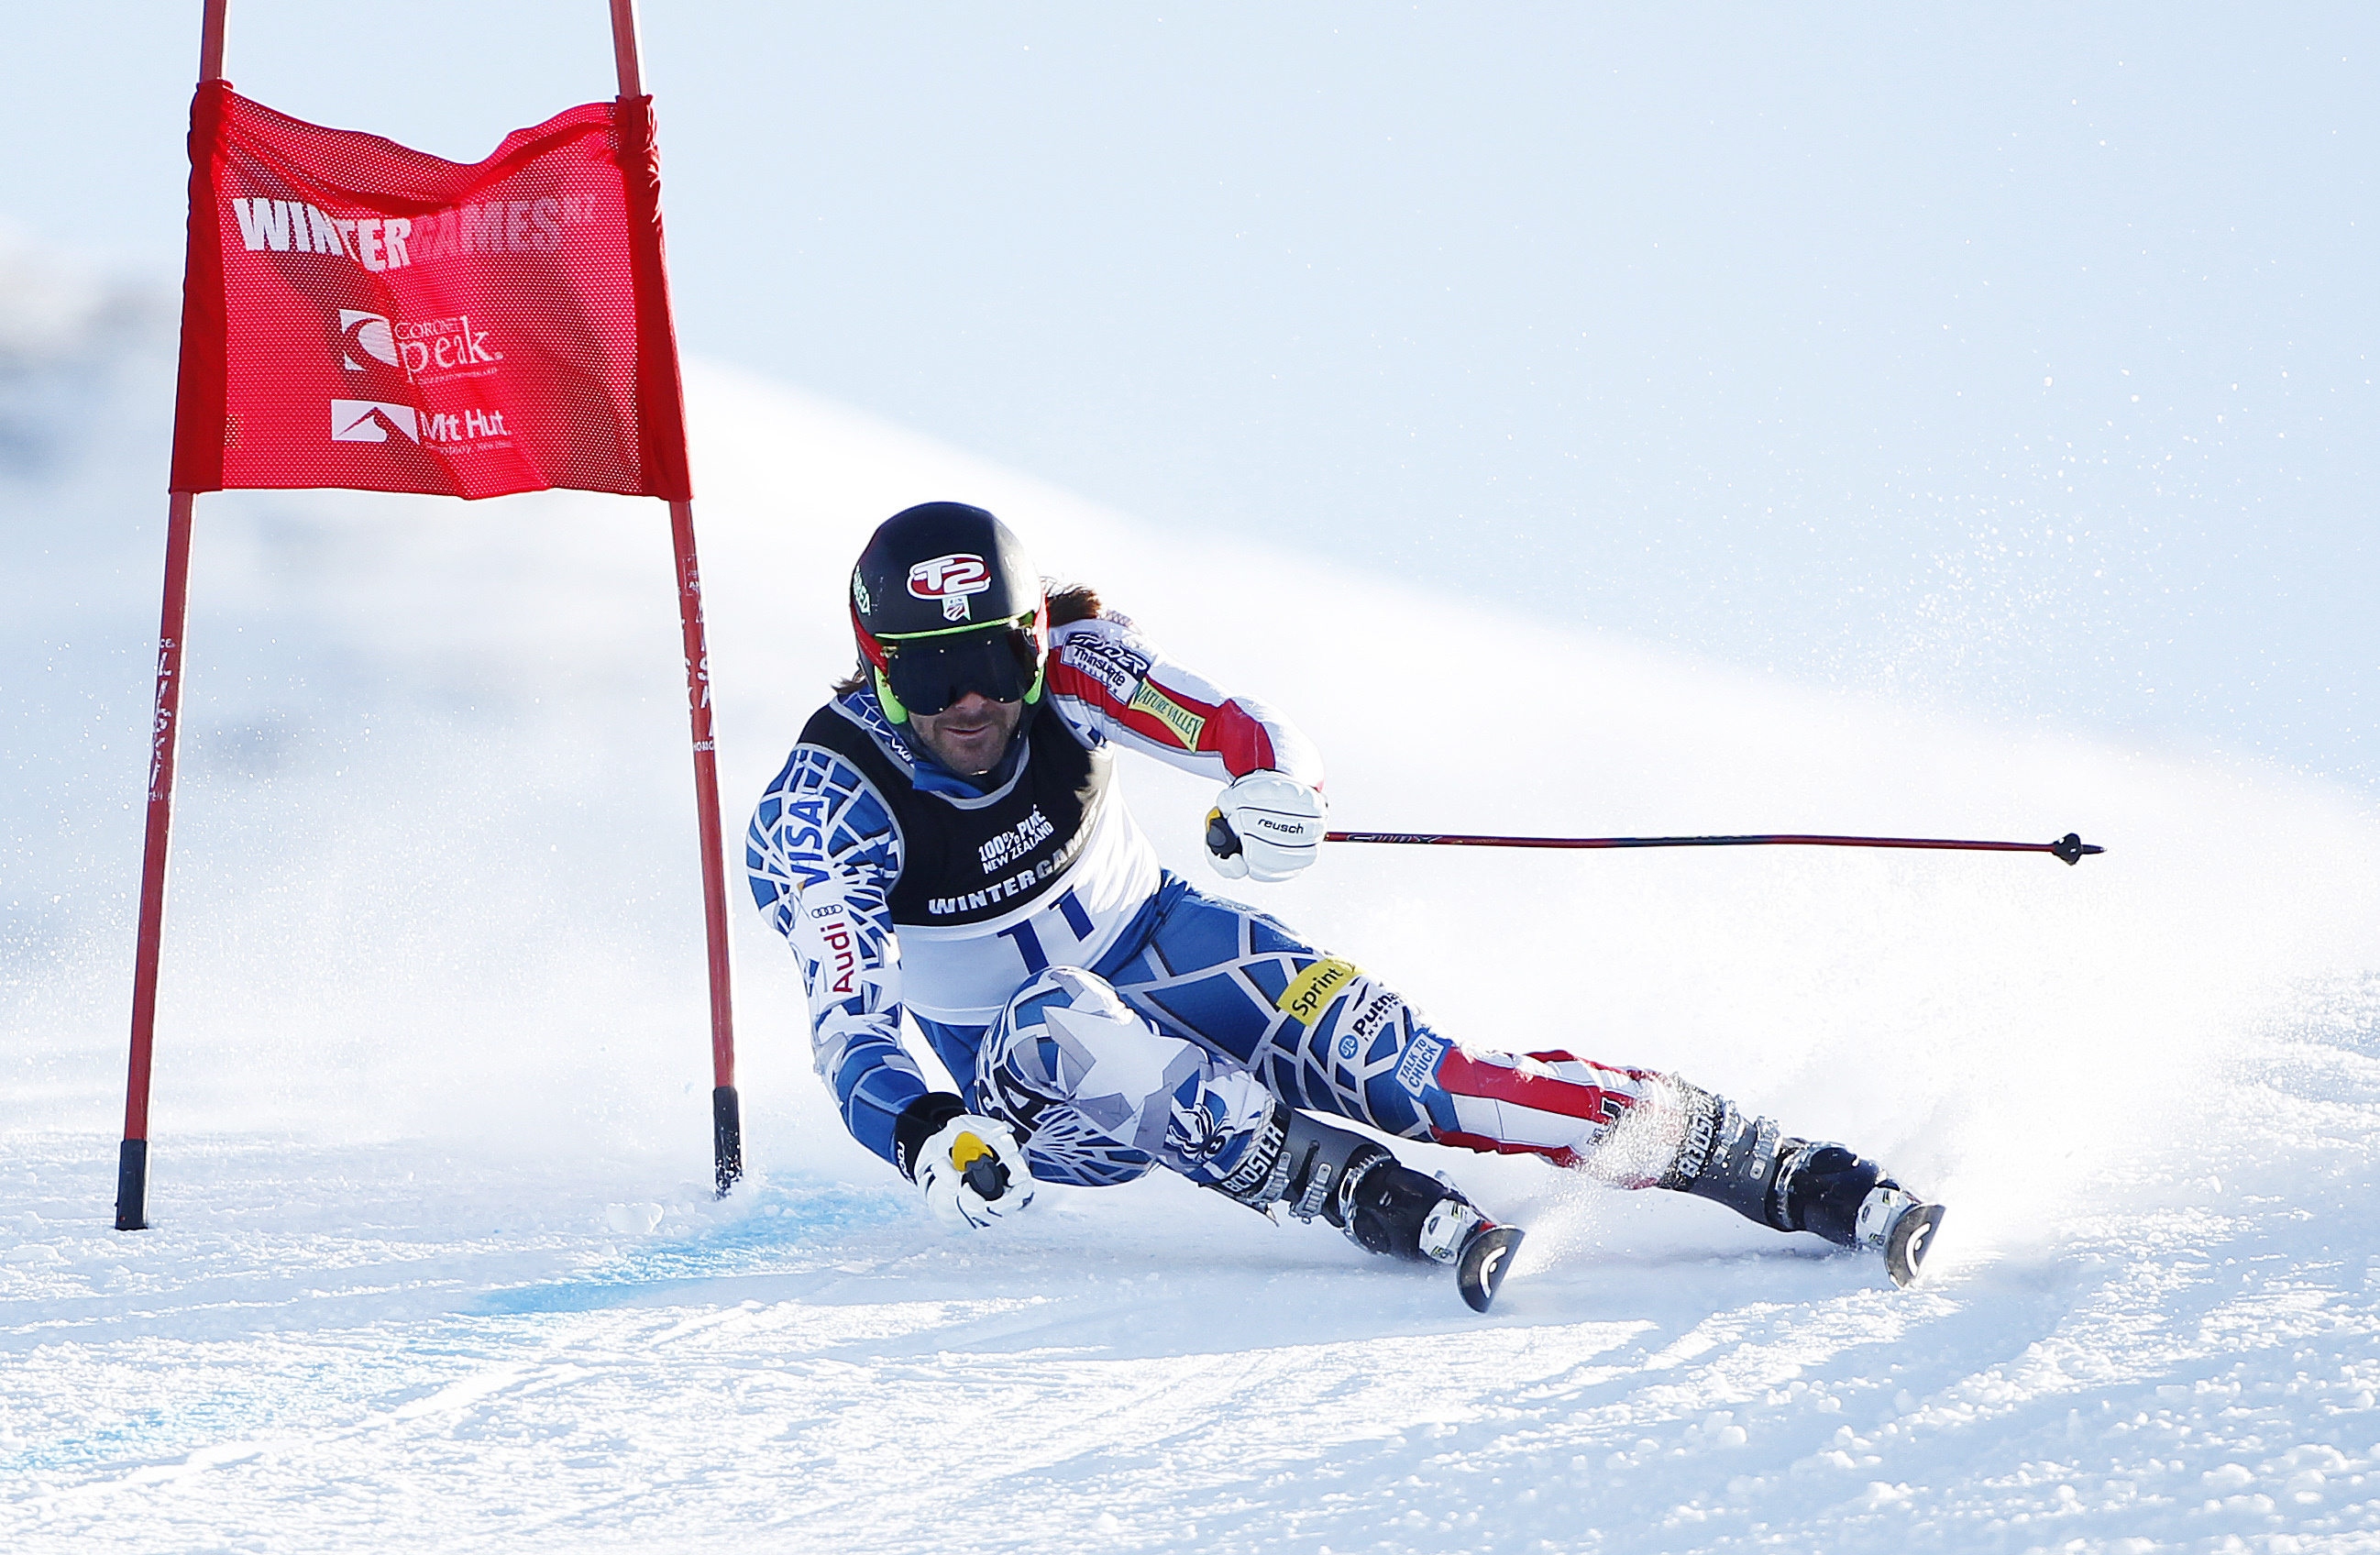 Alpine Skiing: Slalom, Discipline involving downhill between poles or gates, Extreme sports. 2600x1700 HD Wallpaper.